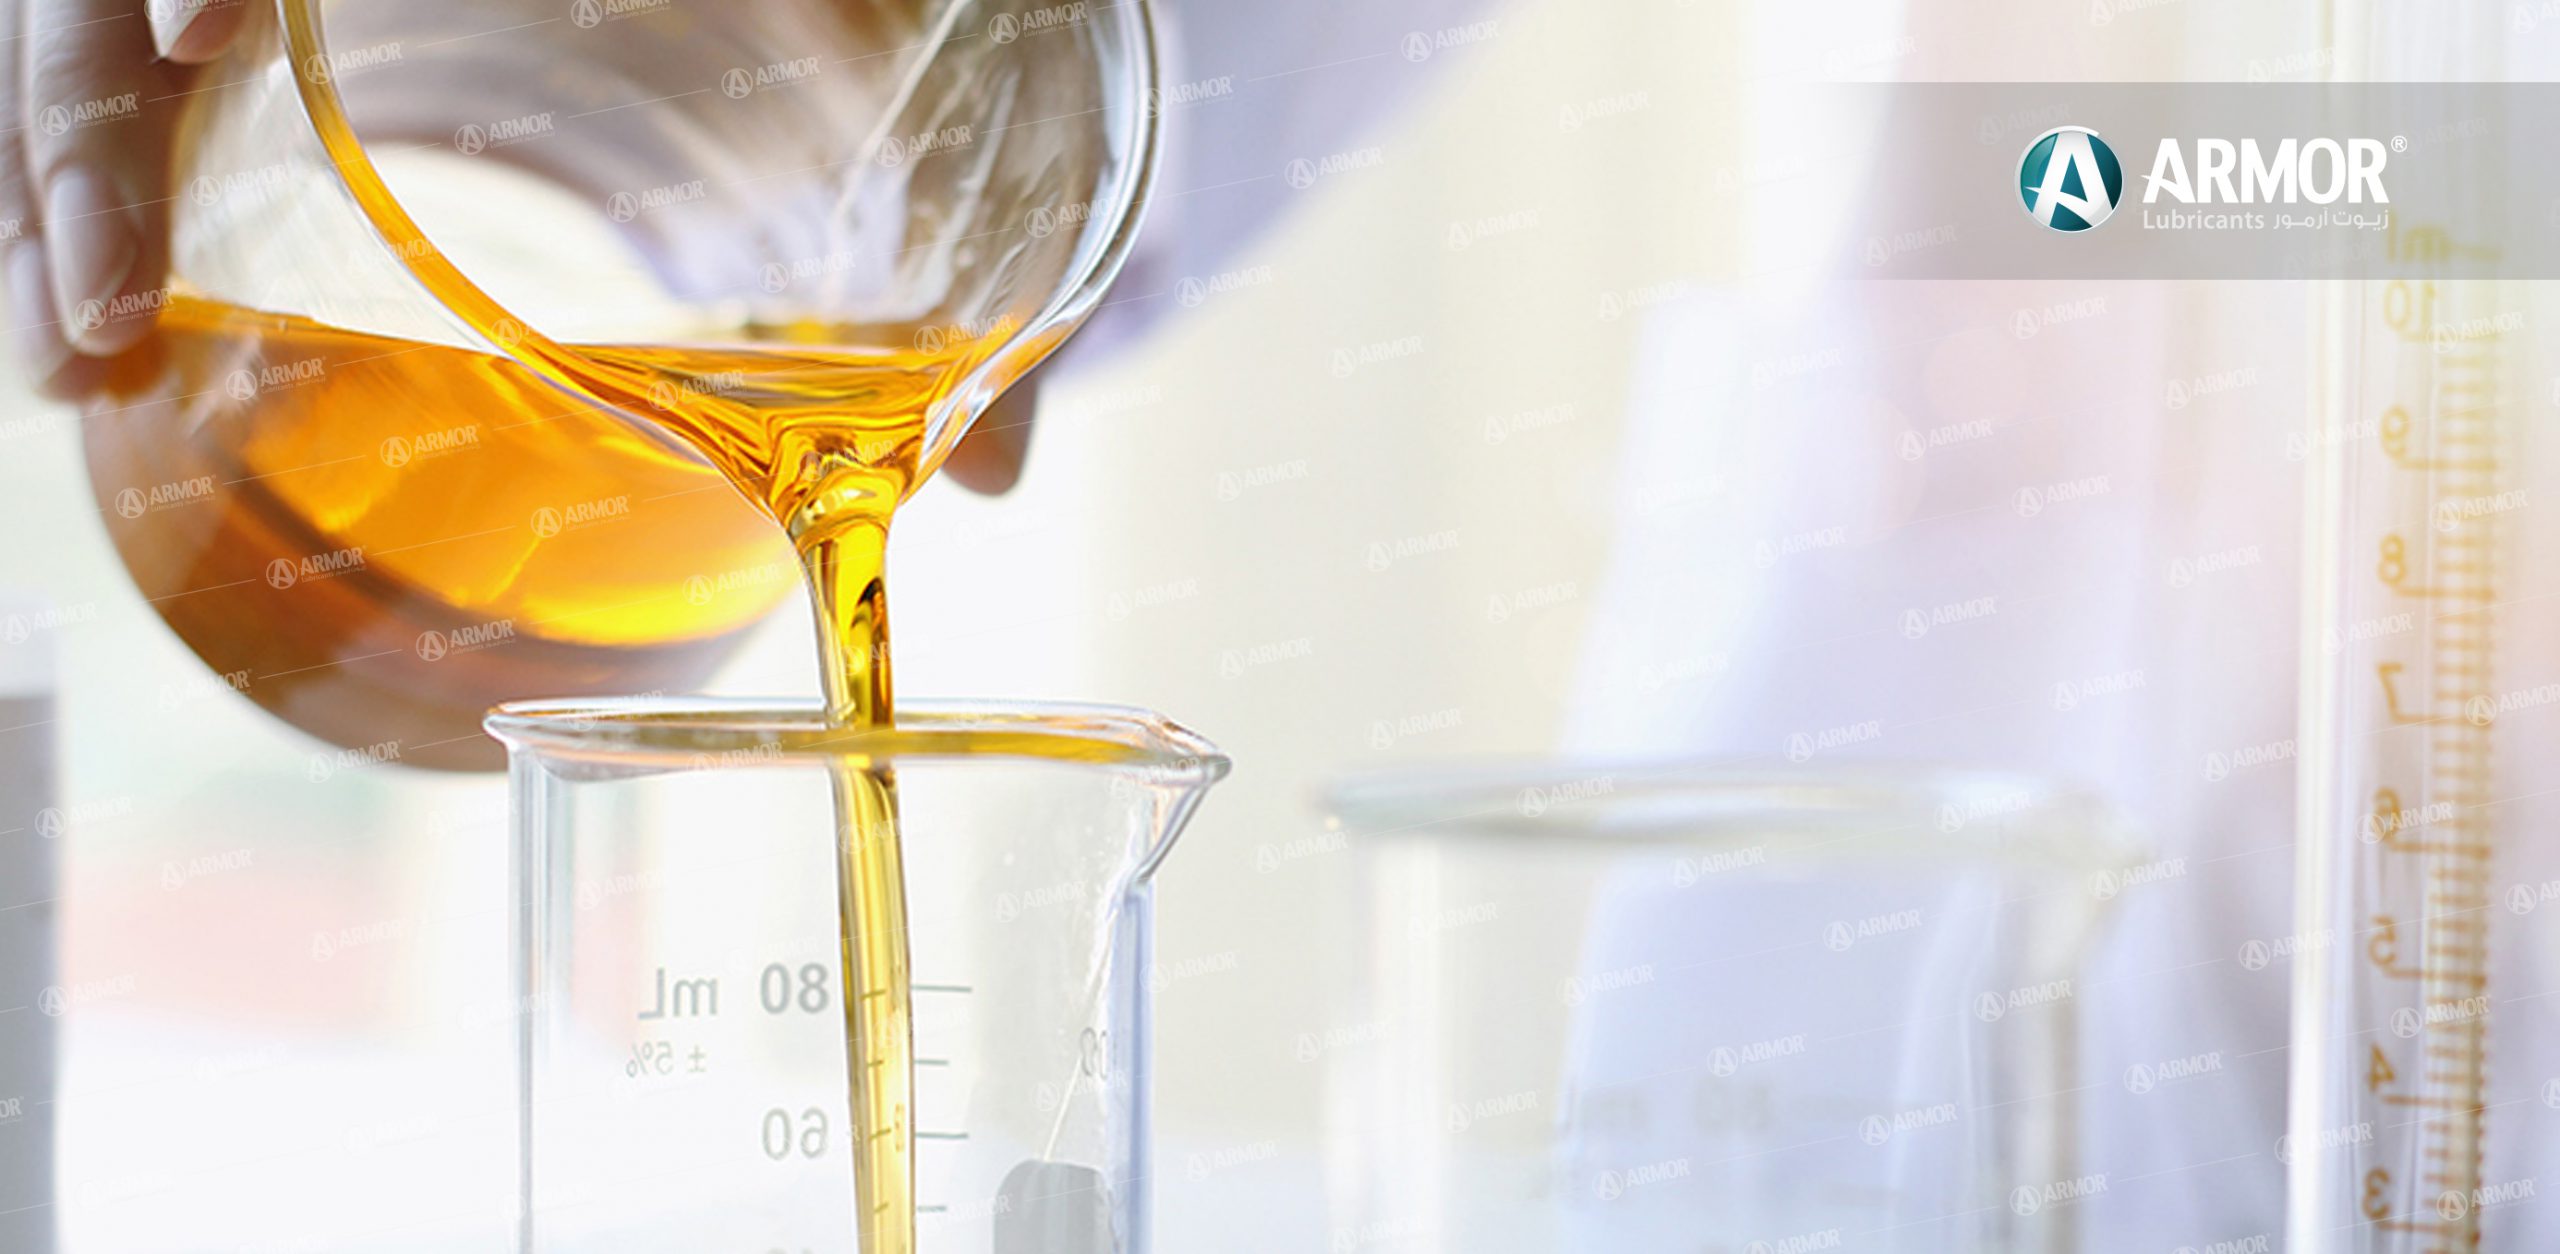 lubricants formulation for effective testing